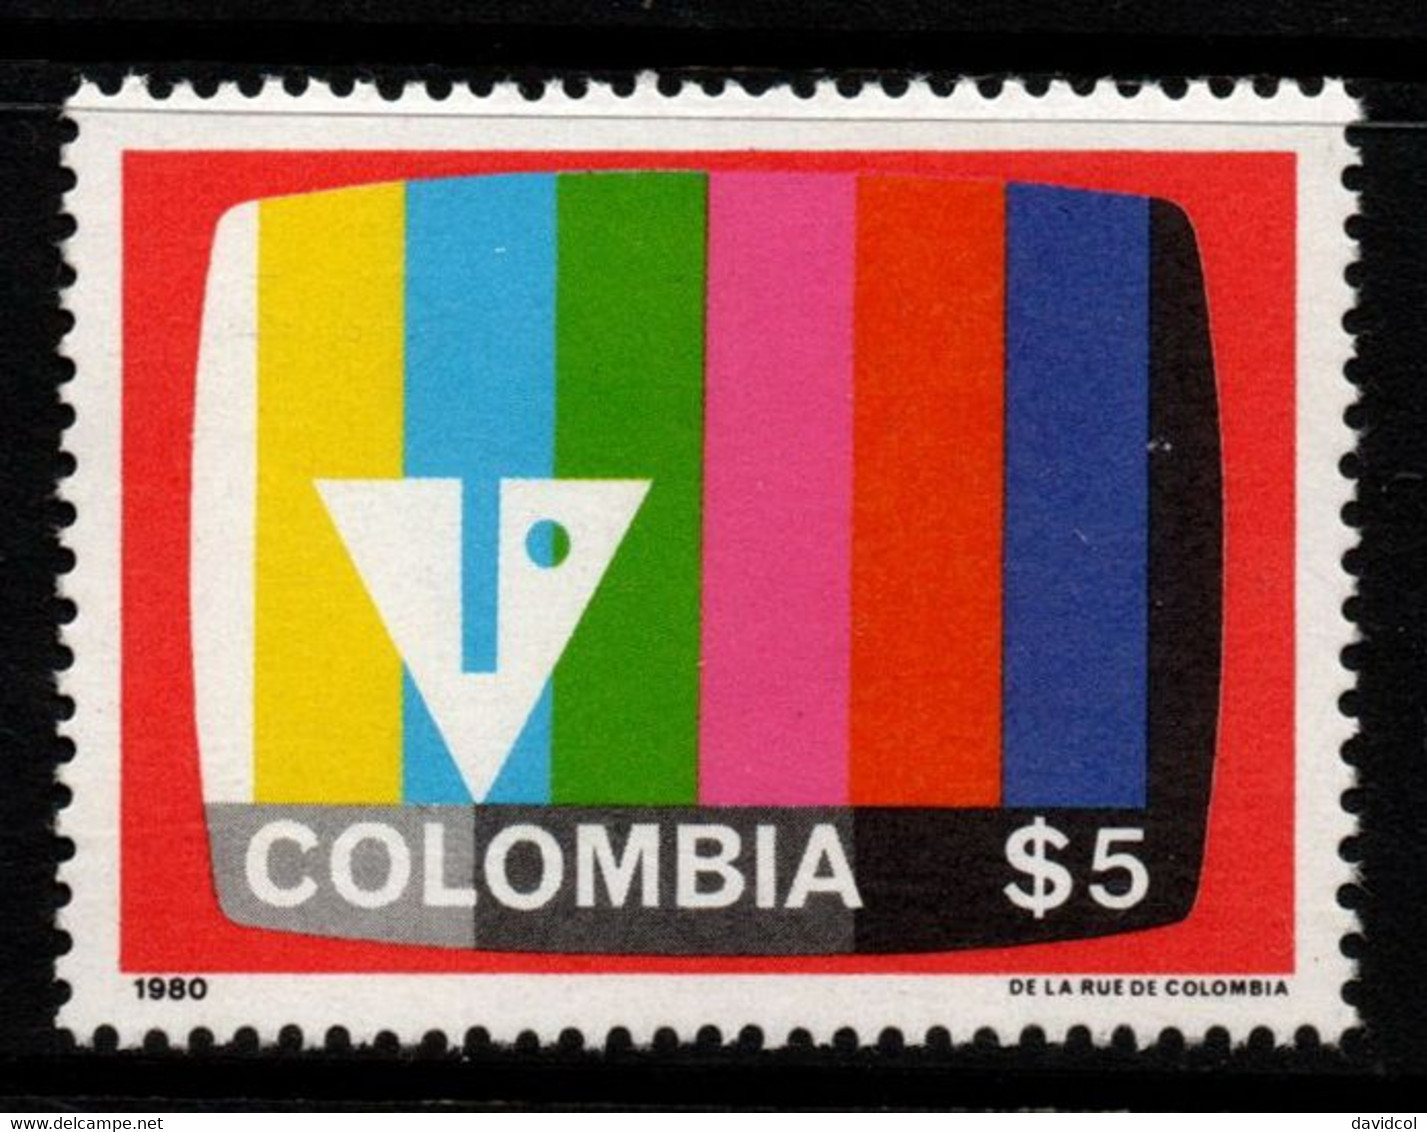 05- KOLUMBIEN - 1980- MI#:1416- MNH- “INRAVISION” – NATIONAL TELEVISION COMPANY - Colombie